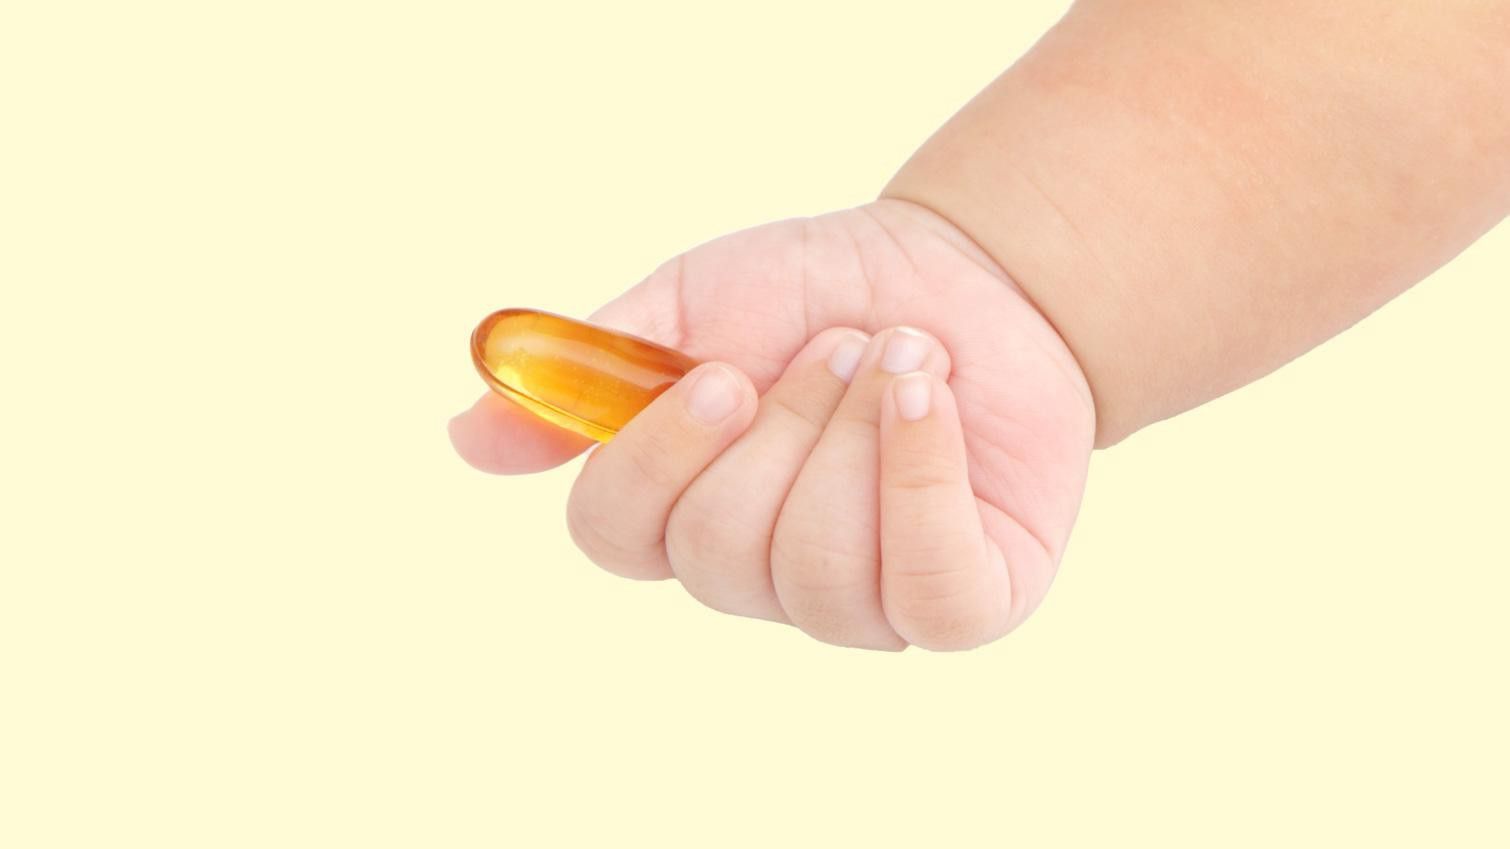 Perlukah Bayi Diberi Suplemen Vitamin?